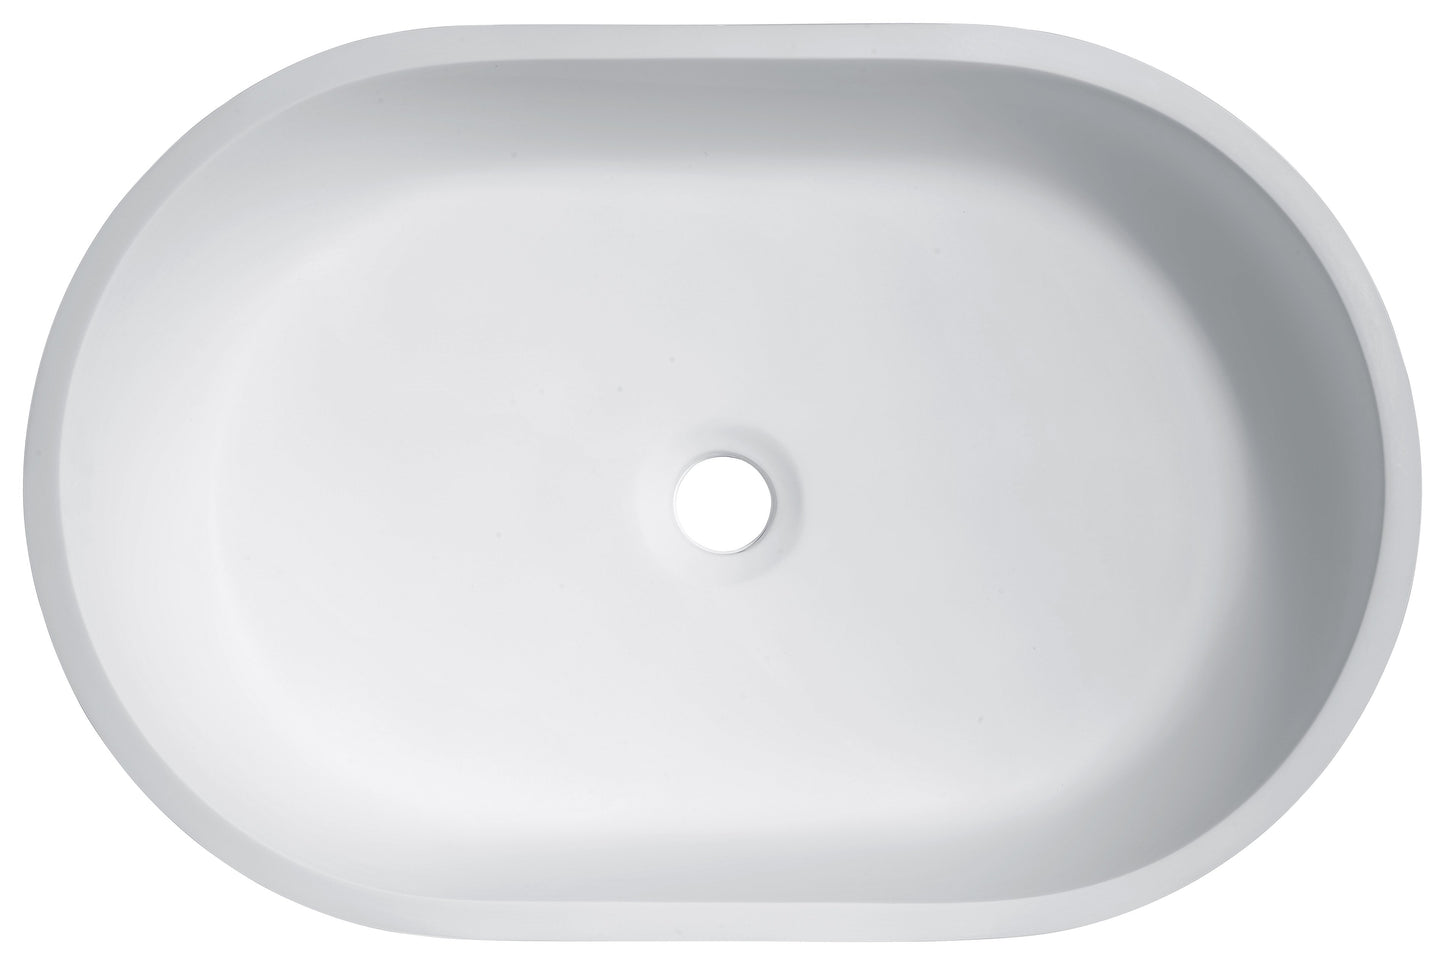 Idle Man Made Stone Vessel Sink in White - Luxe Bathroom Vanities